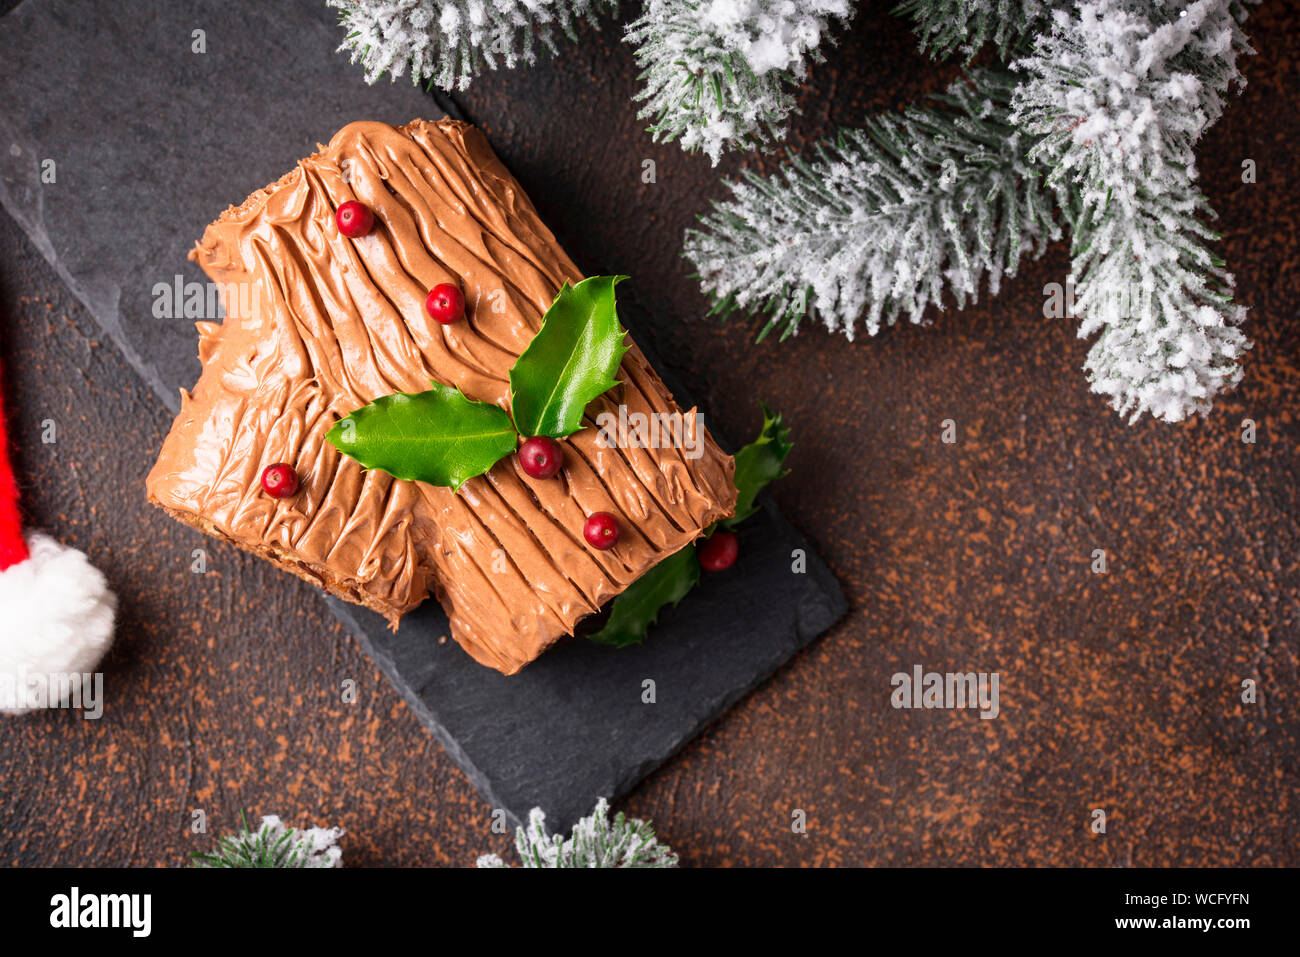 Christmas yule log cake. Traditional chocolate dessert Stock Photo